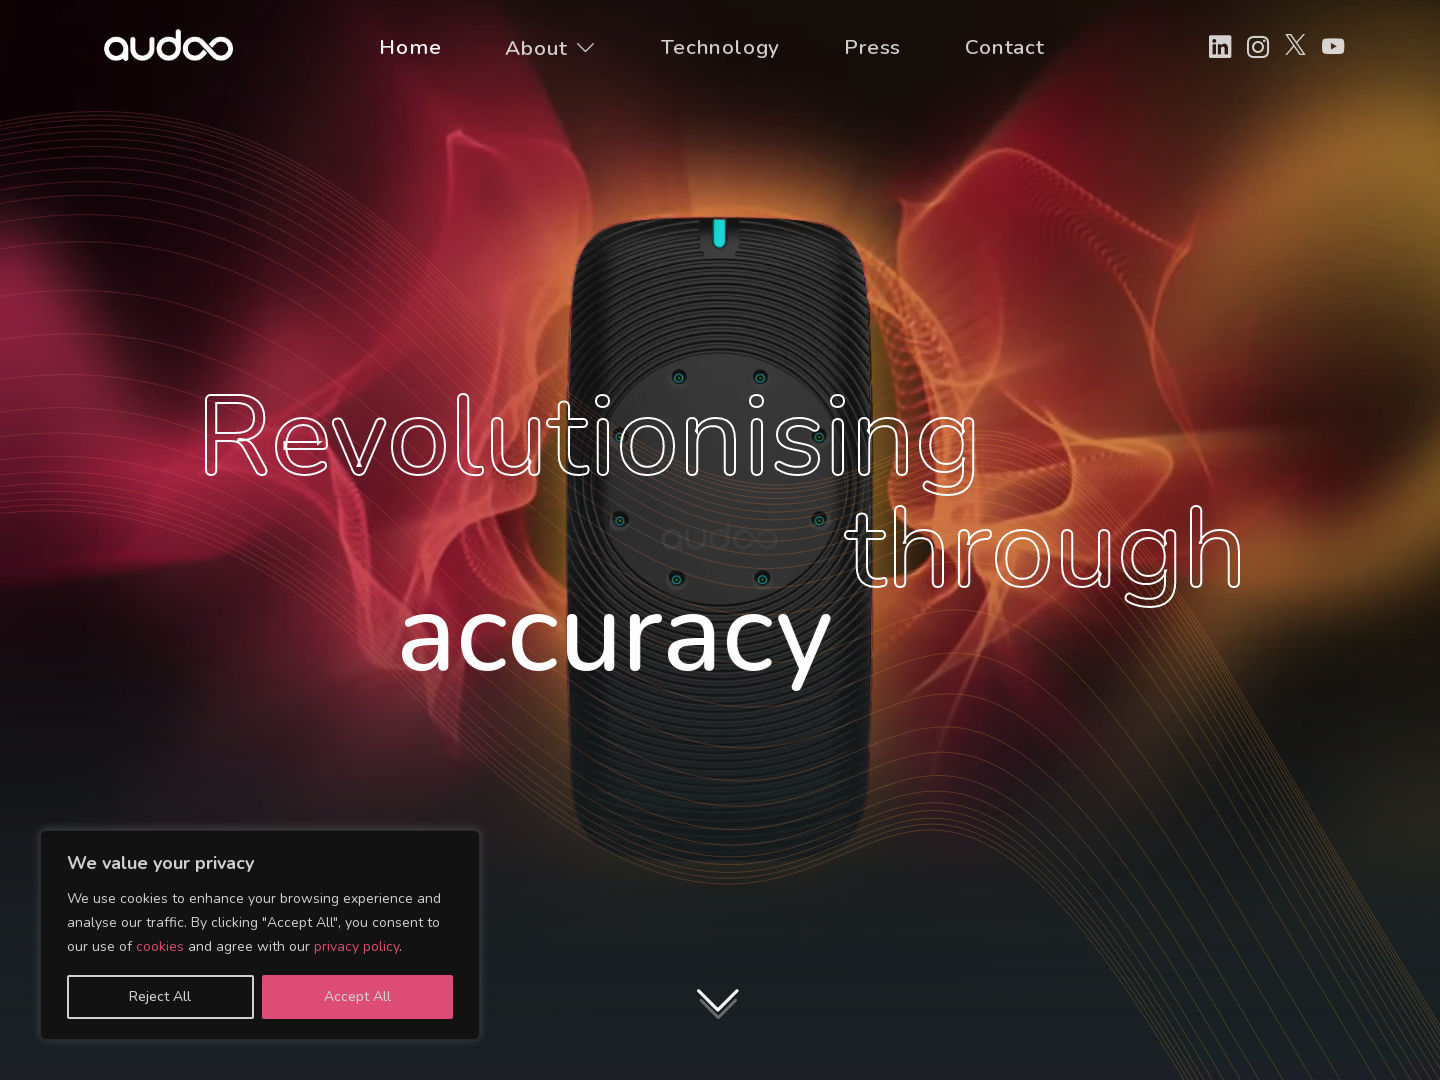 Audoo Raises $5 Million to Expand Music Technology